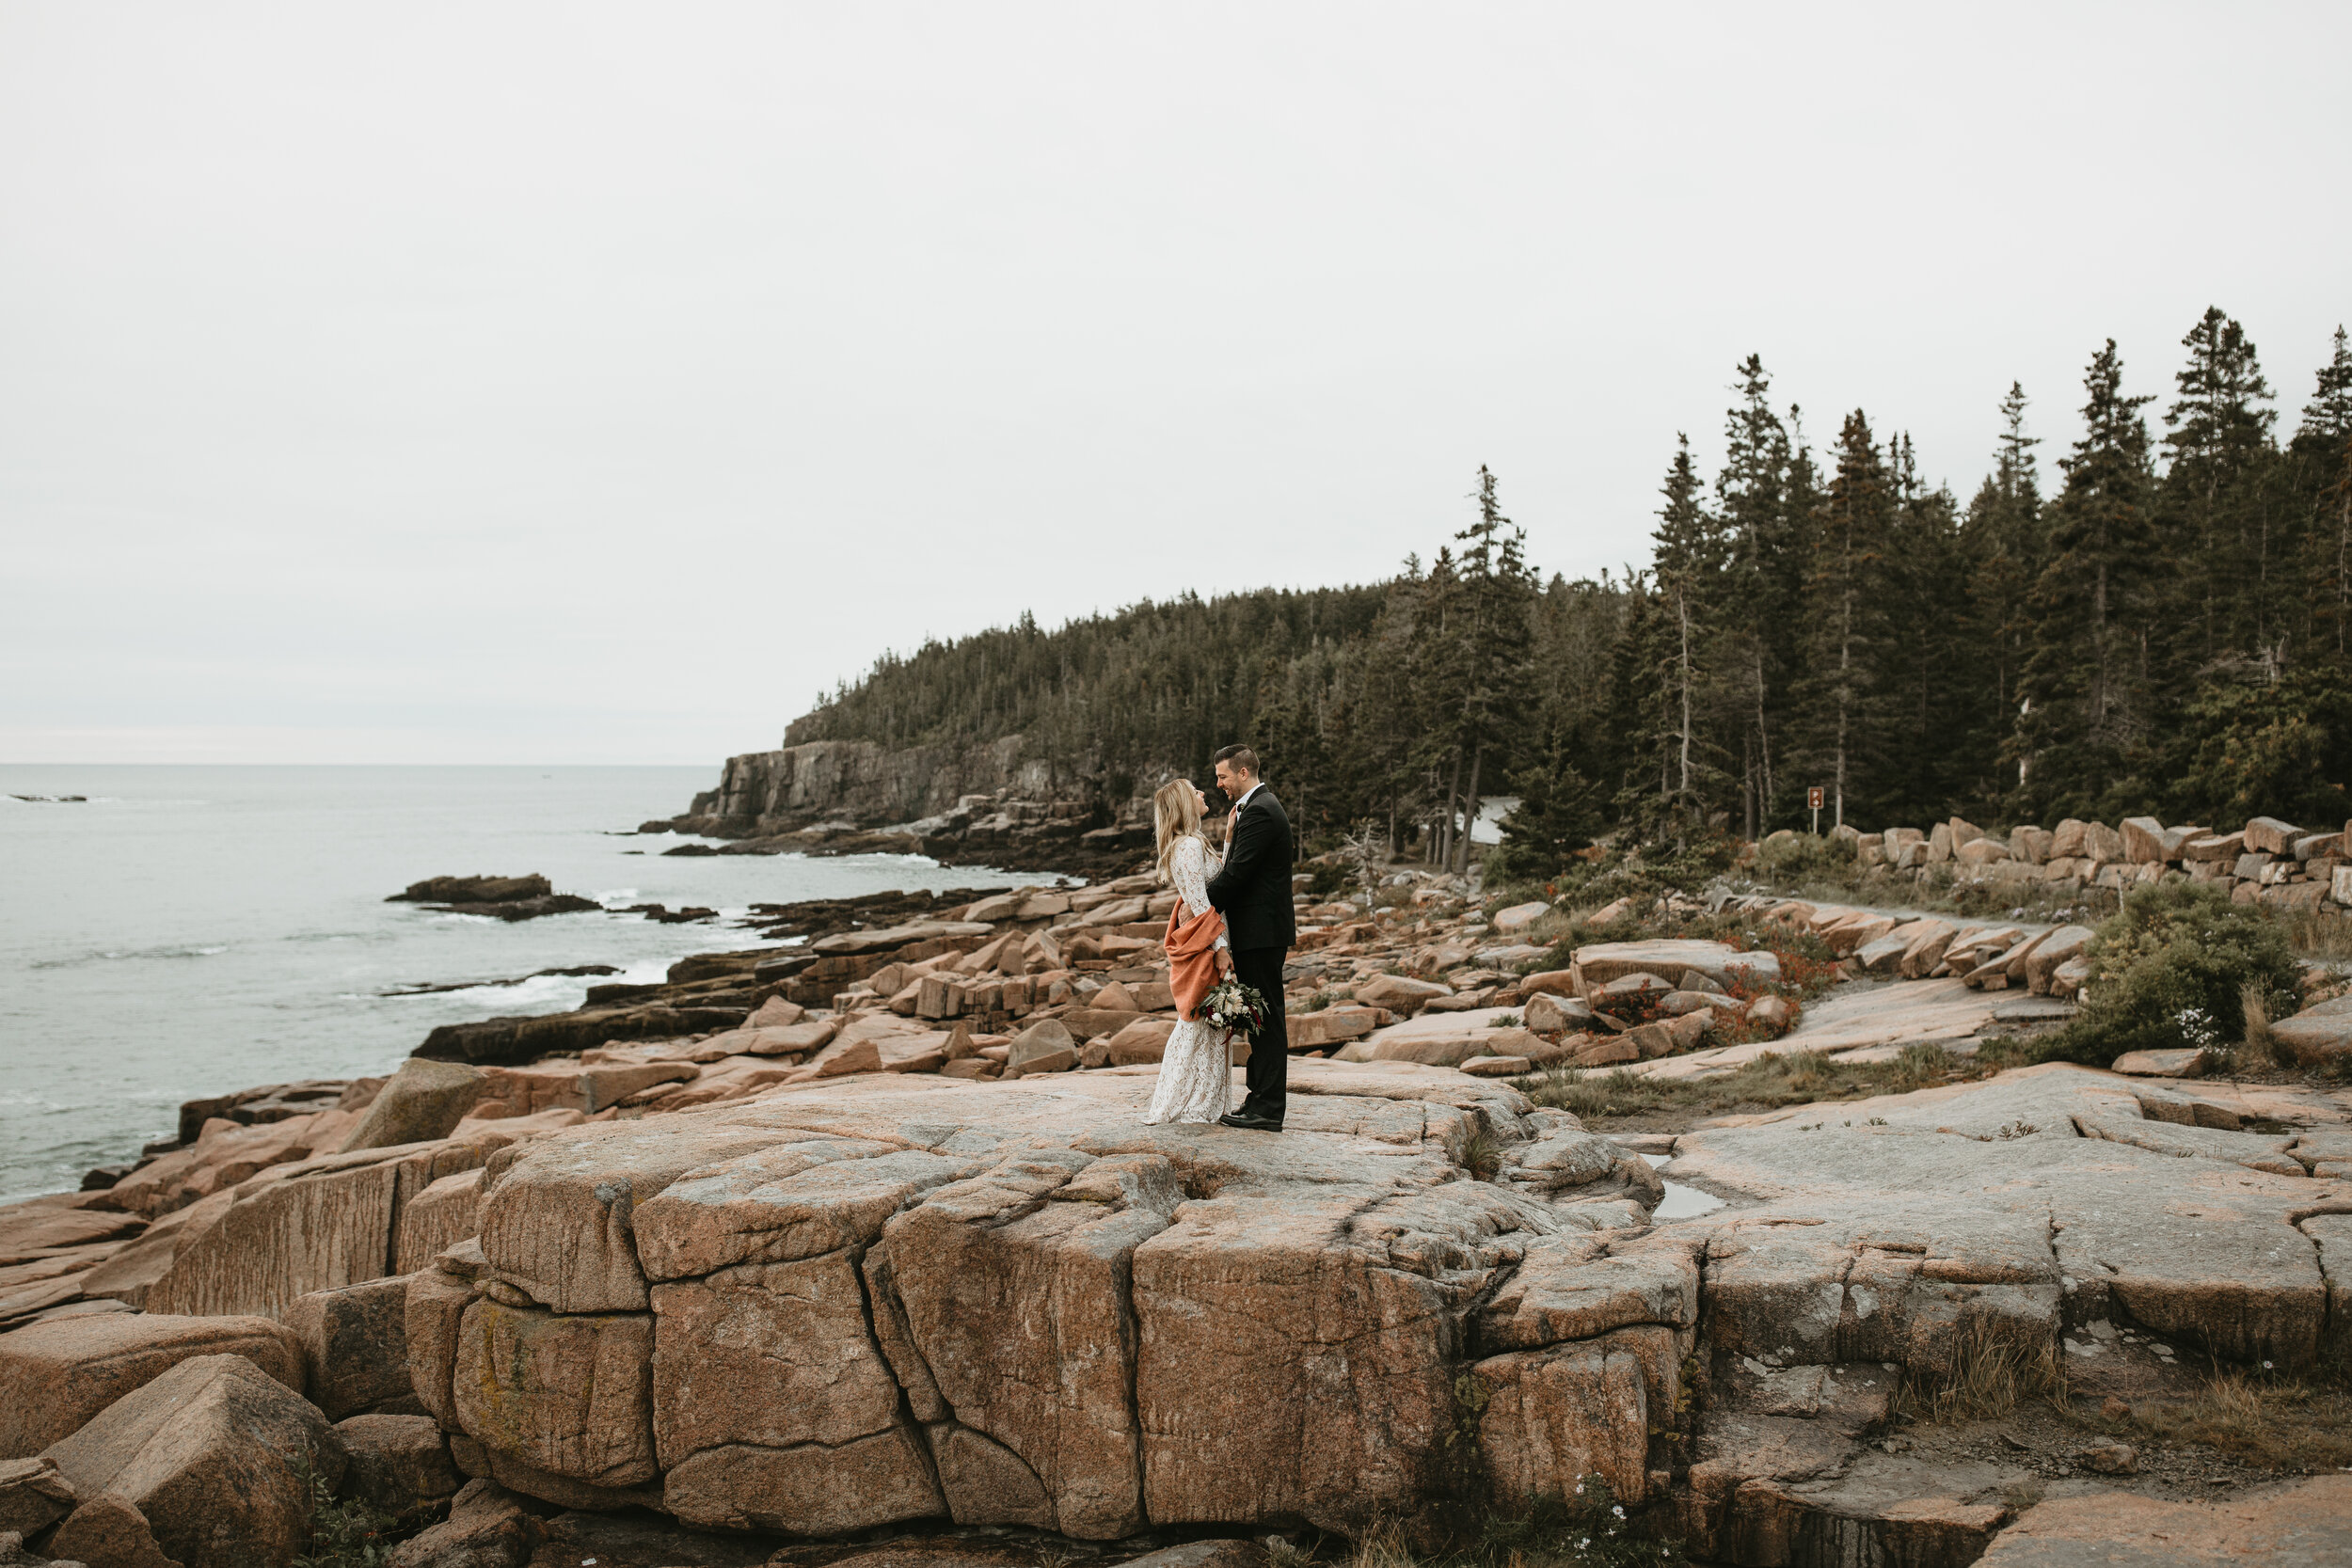 Nicole-Daacke-Photography-Acadia-national-park-elopement-photography-elopement-in-acadia-inspiration-maine-intimate-wedding-destination-elopement-photographer-rainy-day-maine-coast-bar-harbor-elopement-photography-147.jpg